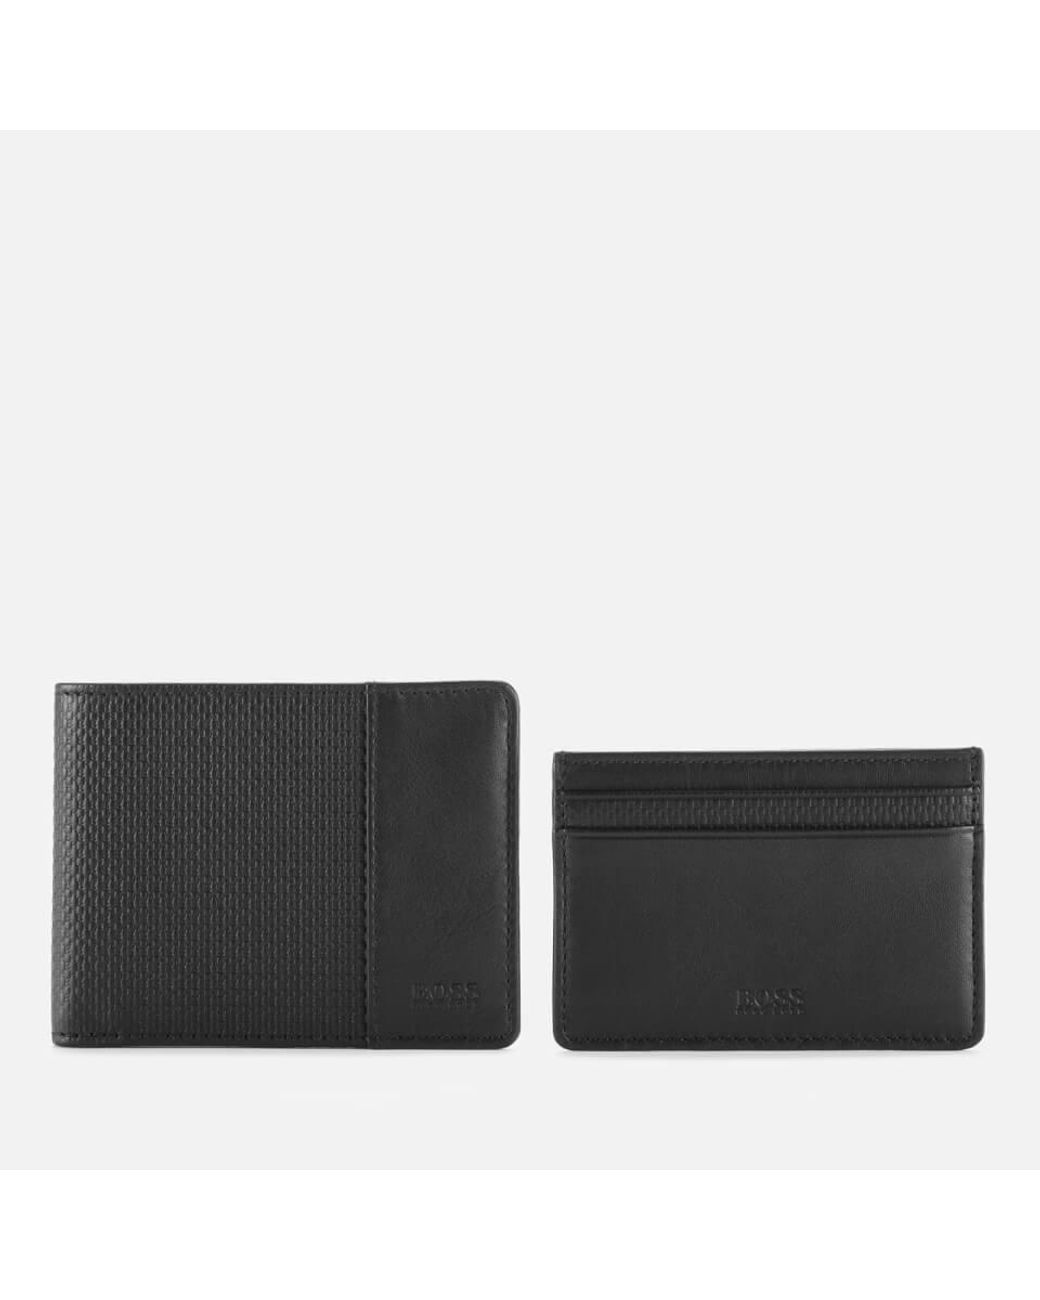 BOSS Wallet And Card Holder Gift Set in Black for Men | Lyst